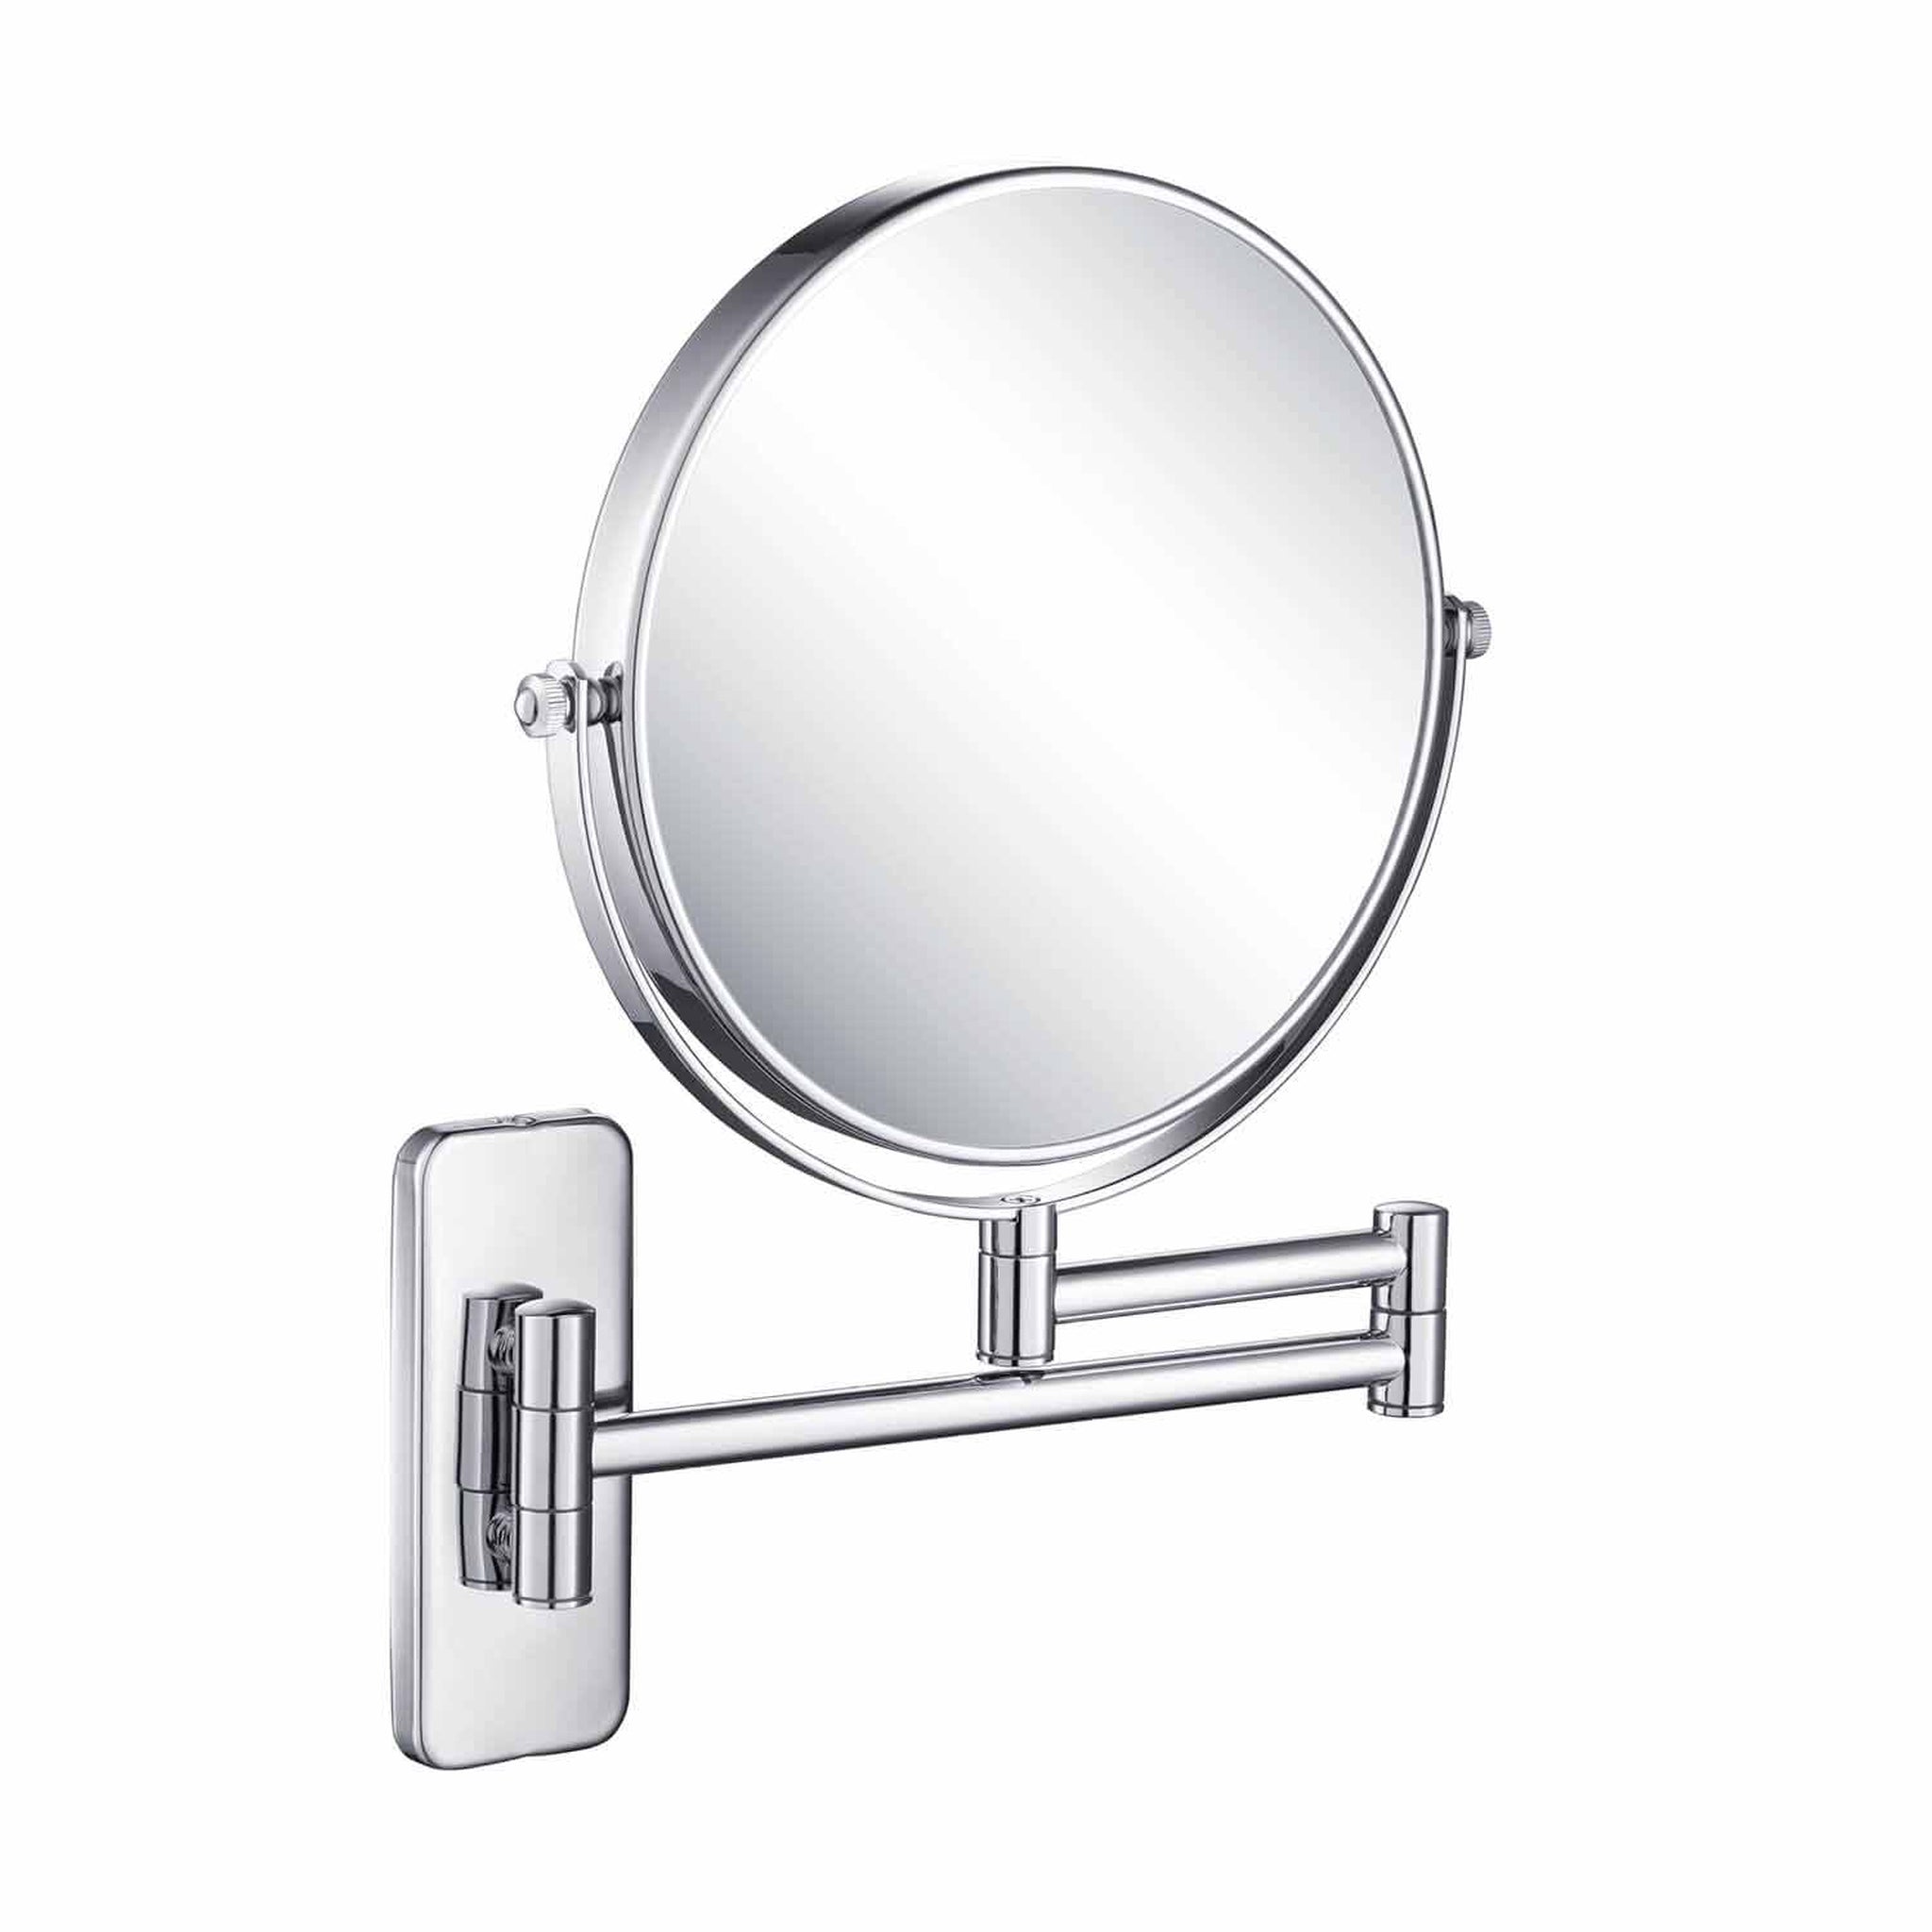 KIBI, KIBI Circular Brass Bathroom Magnifying Makeup Shaving Mirror in Chrome Frame Finish